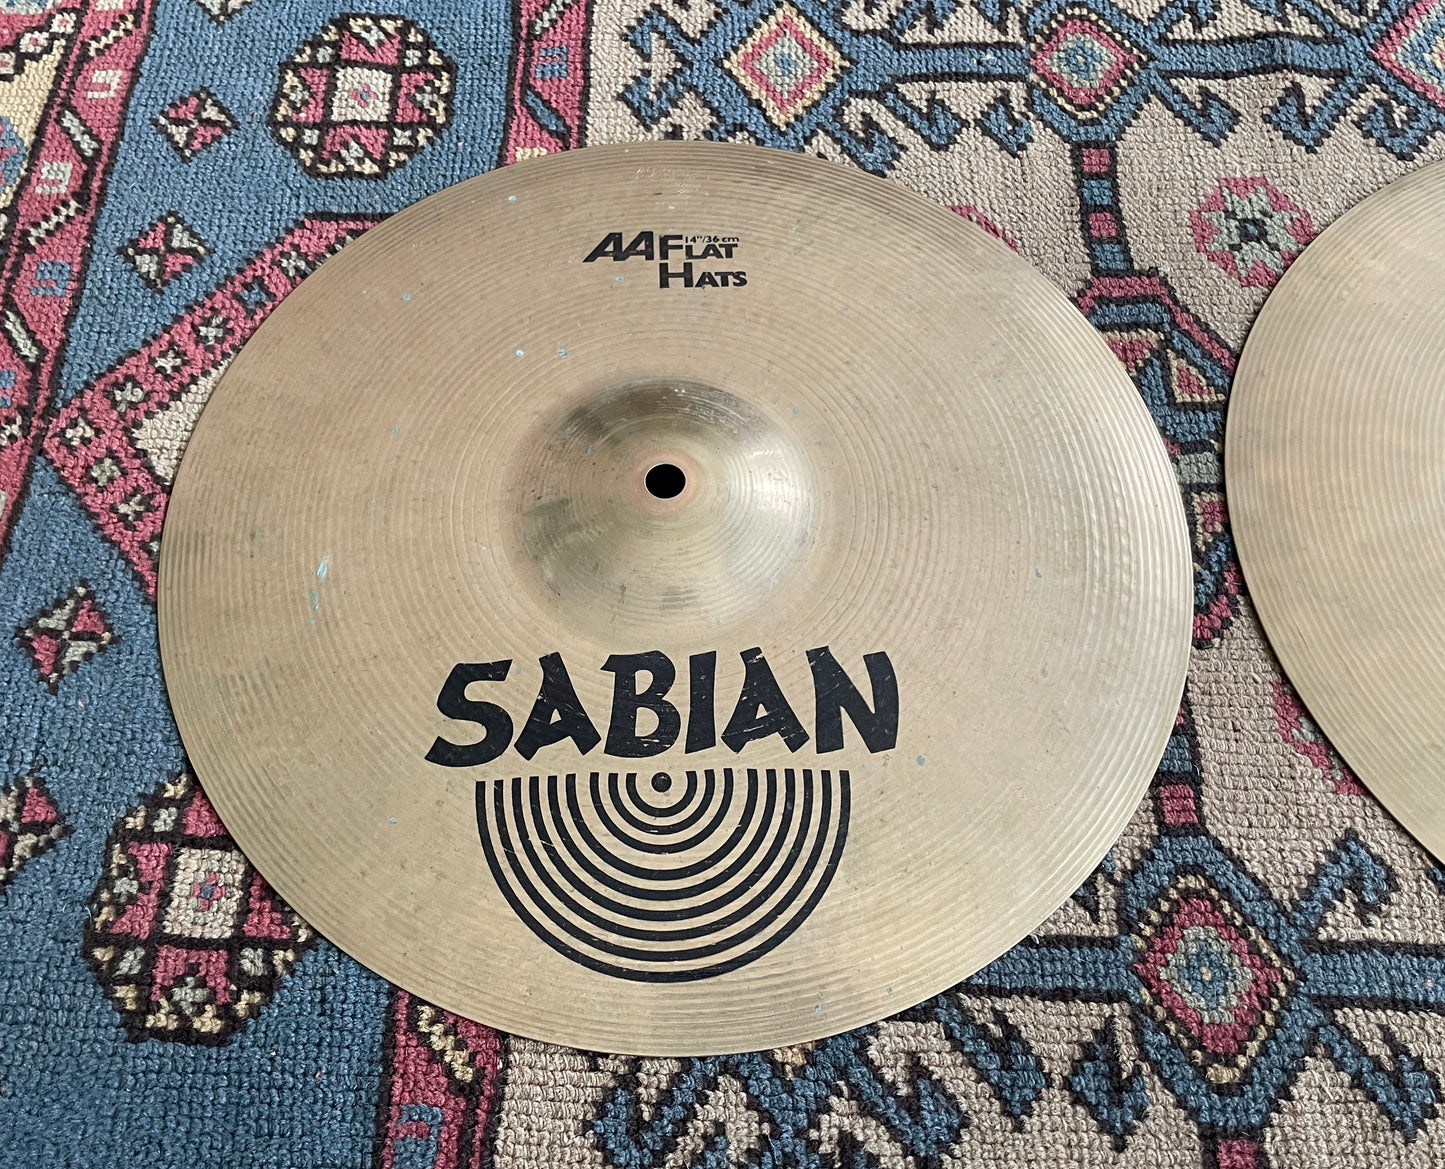 14" Sabian AA Flat Hats Hi-Hat Cymbal Pair 1052g/1460g